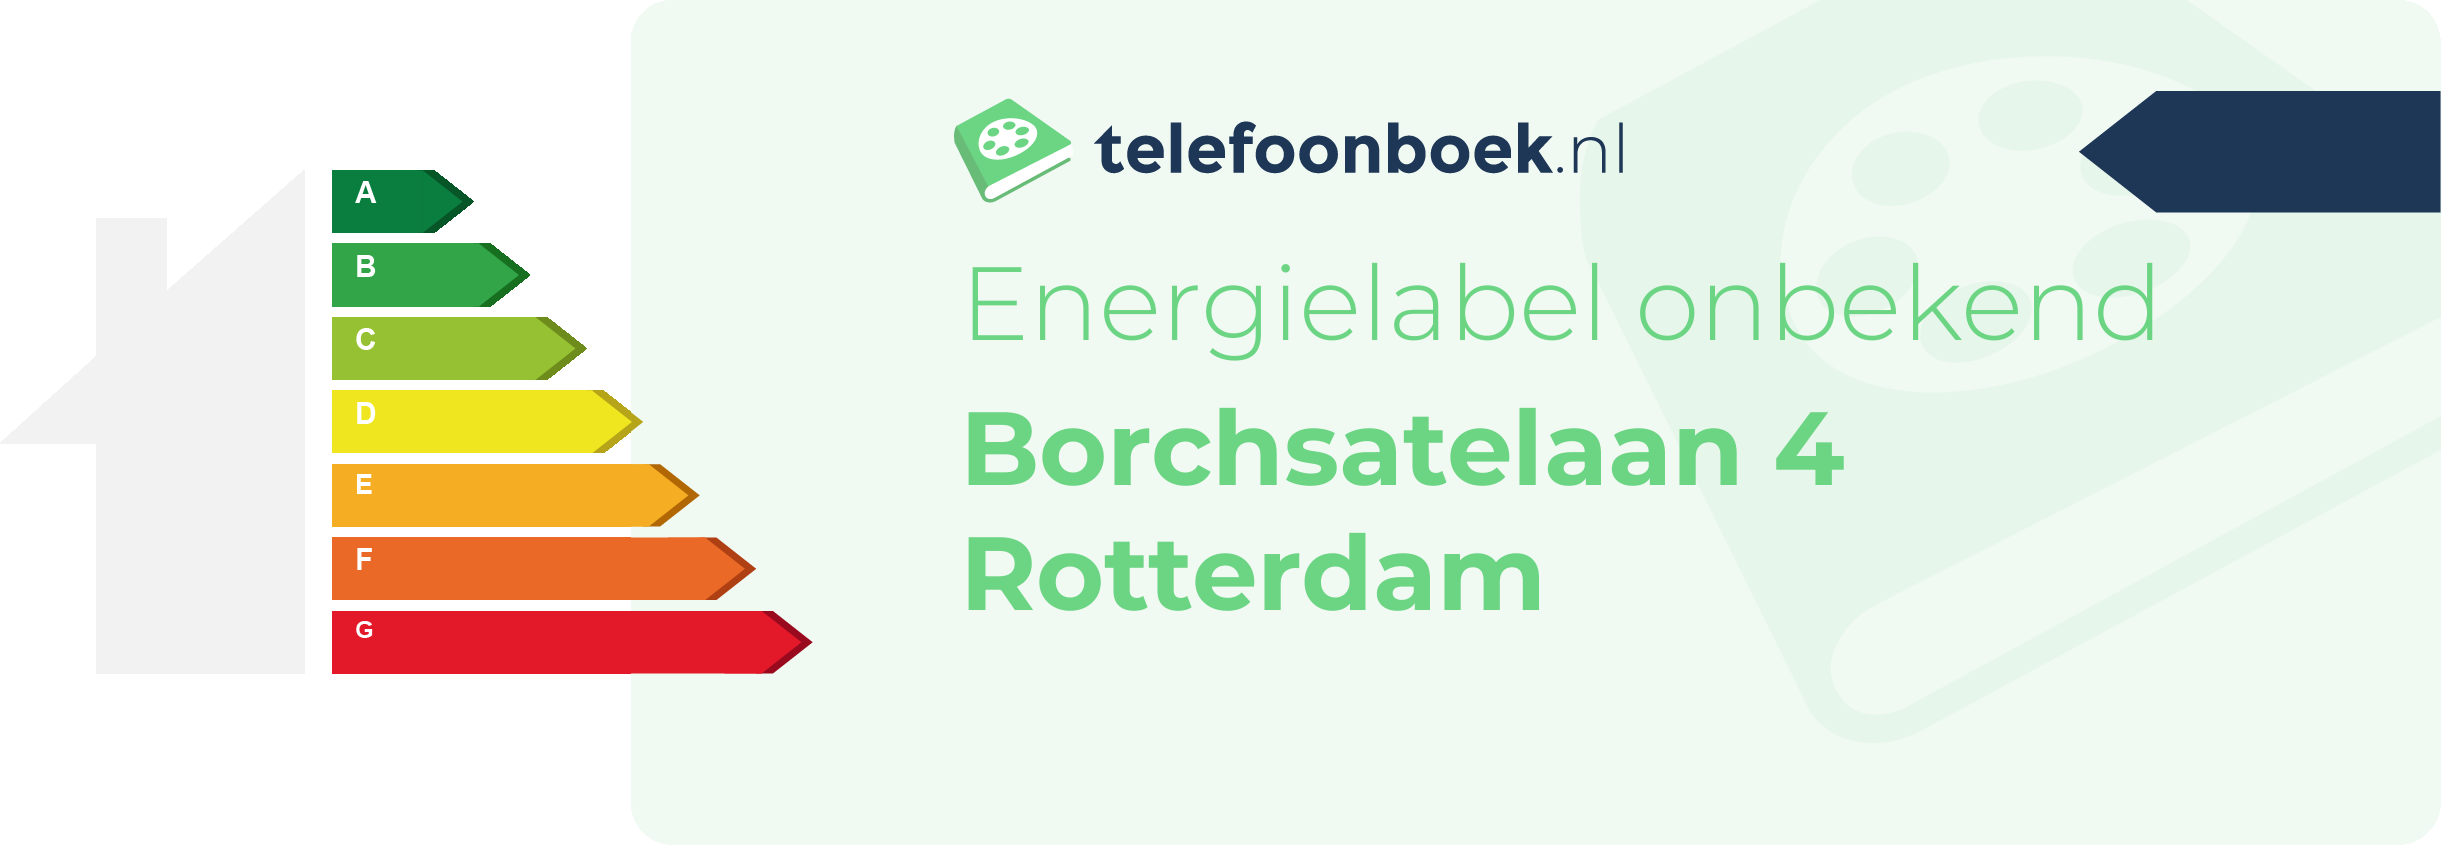 Energielabel Borchsatelaan 4 Rotterdam